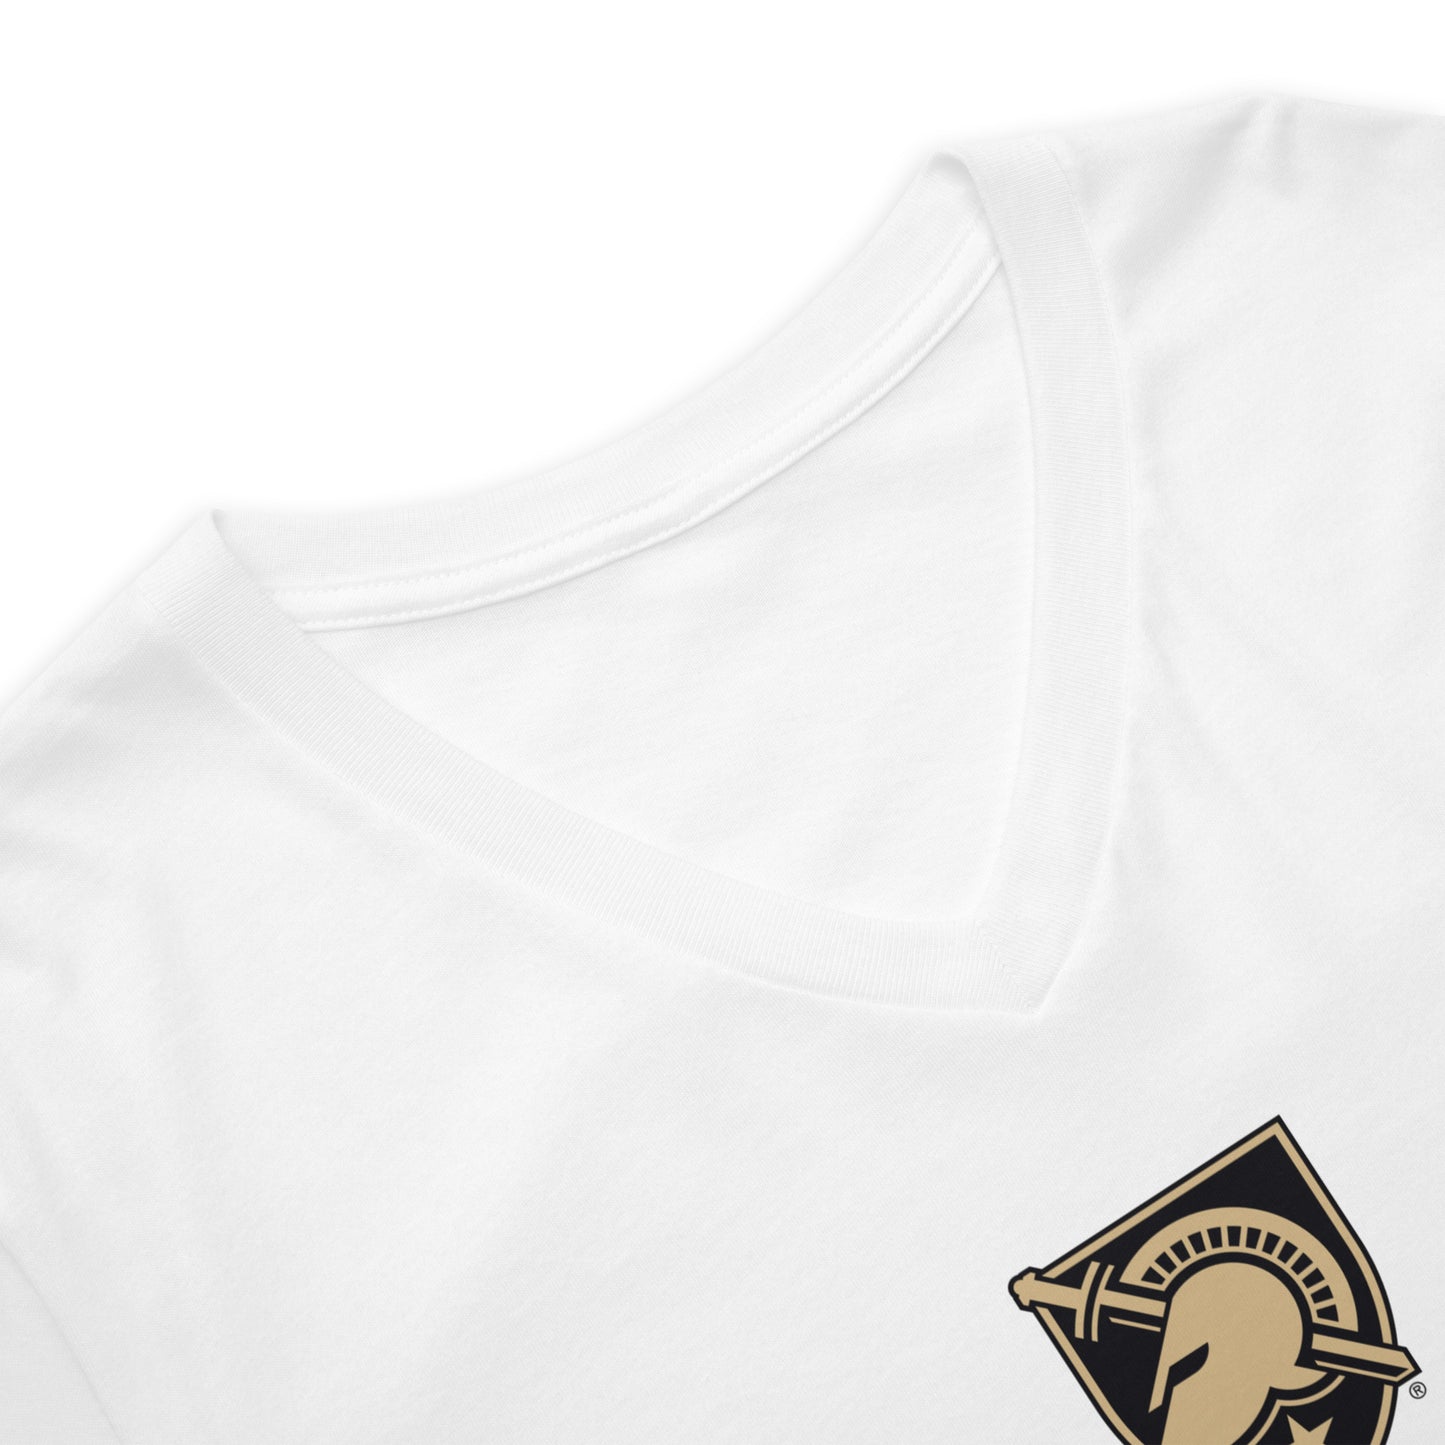 Army West Point Rabble Rousers Unisex Short Sleeve V-Neck T-Shirt (White)